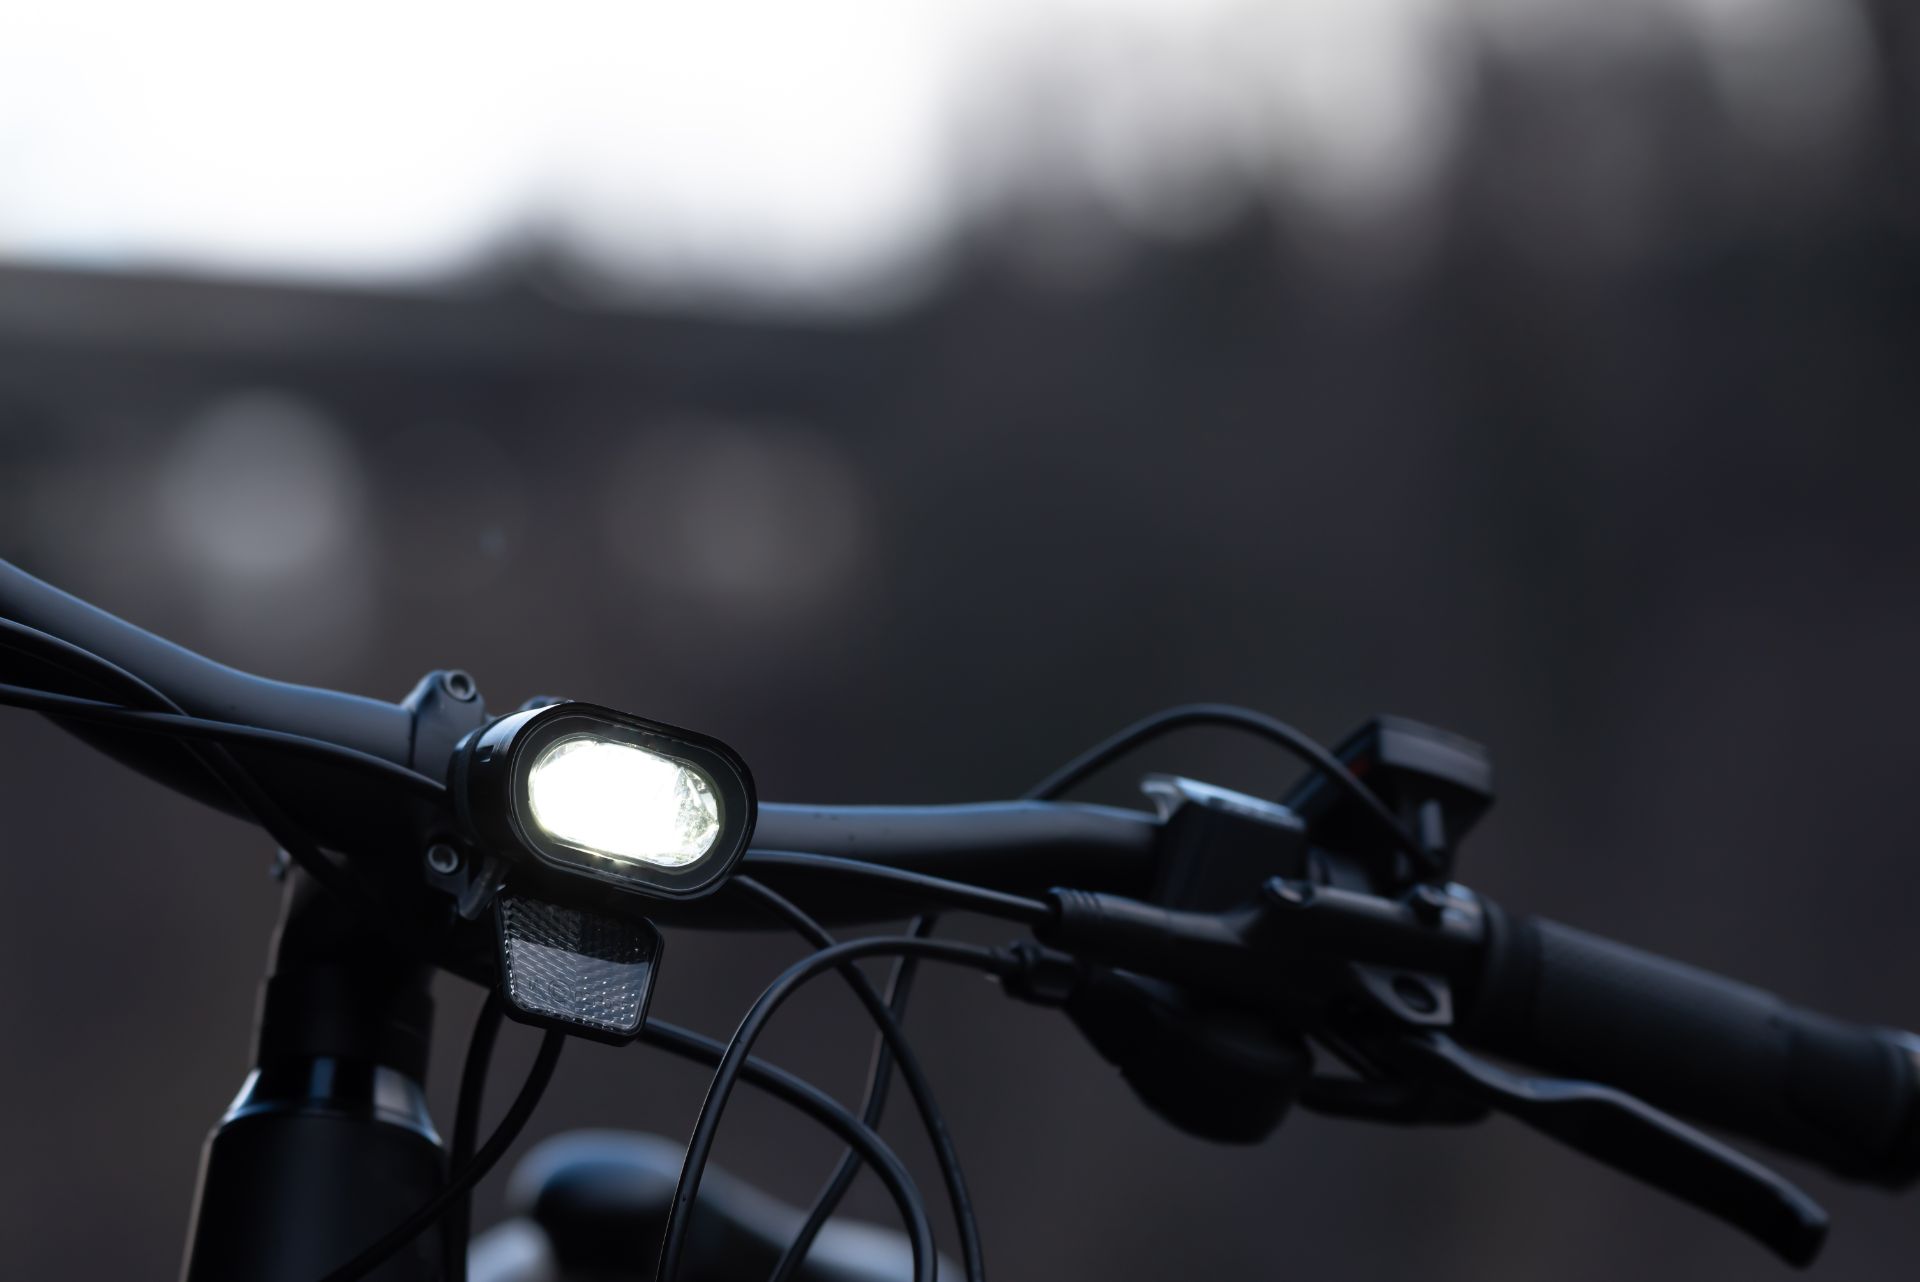 Bicycle light